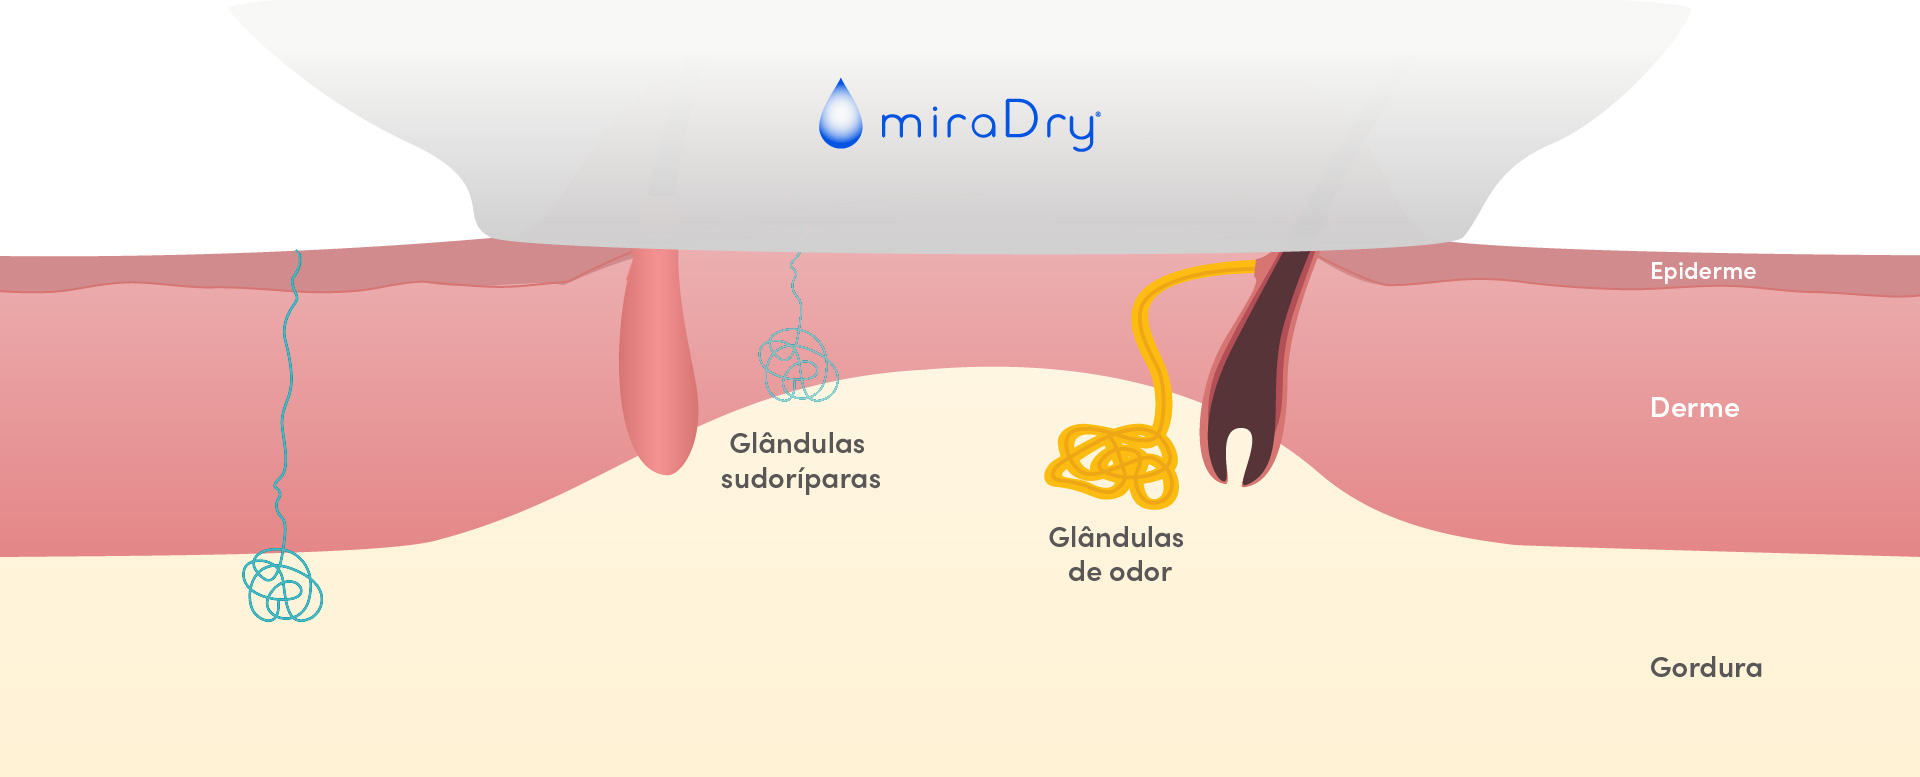 Como funciona o miraDry?